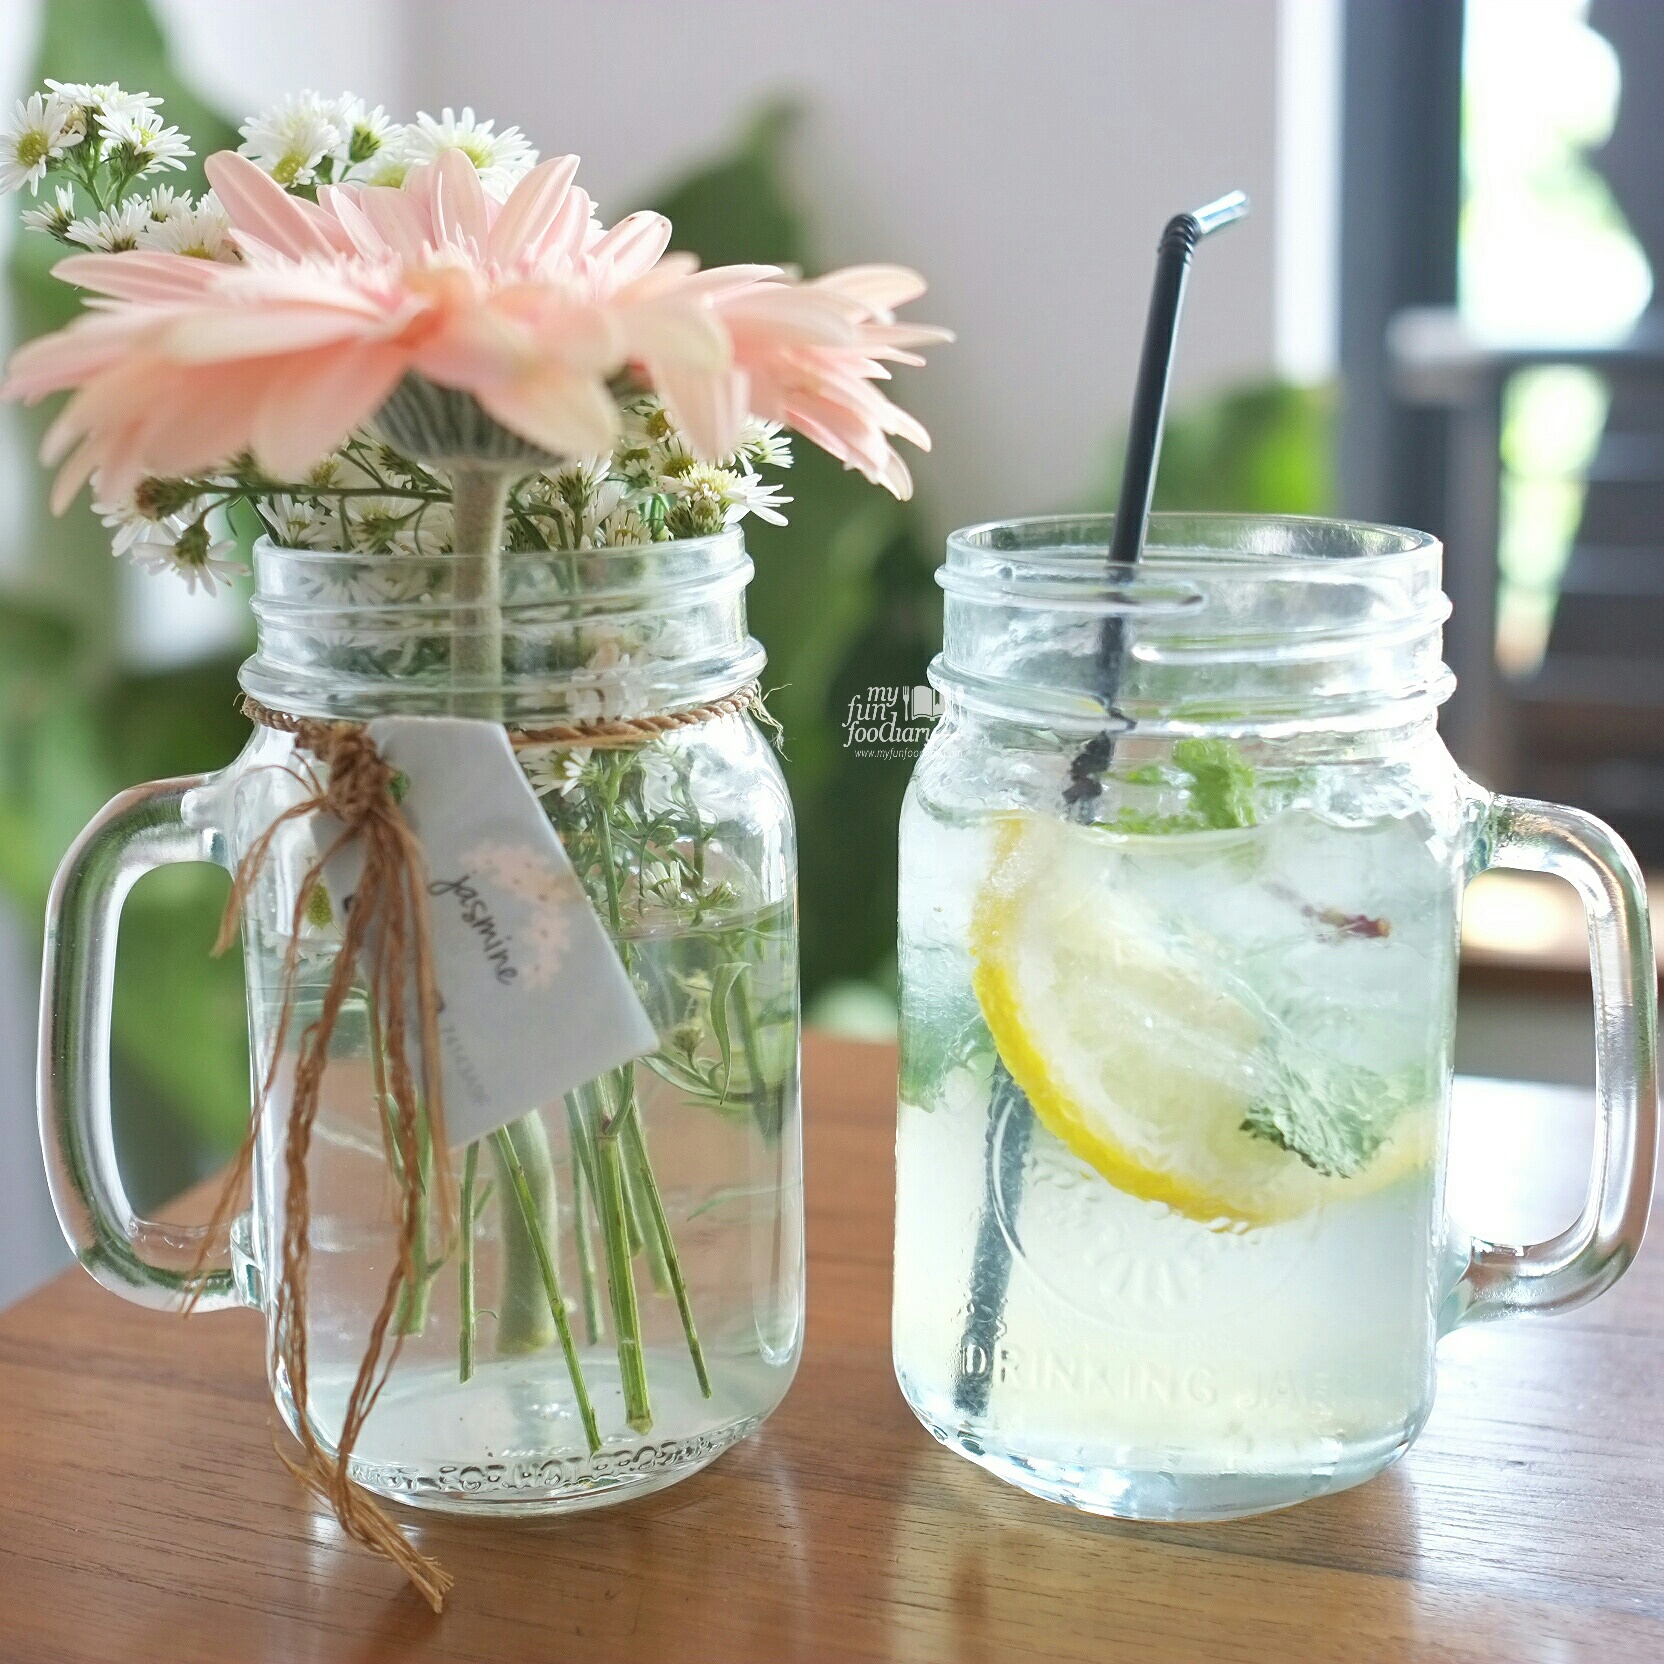 Seasonal Homemade Lemonade at Sukha Delights in Bandung by Myfunfoodiary